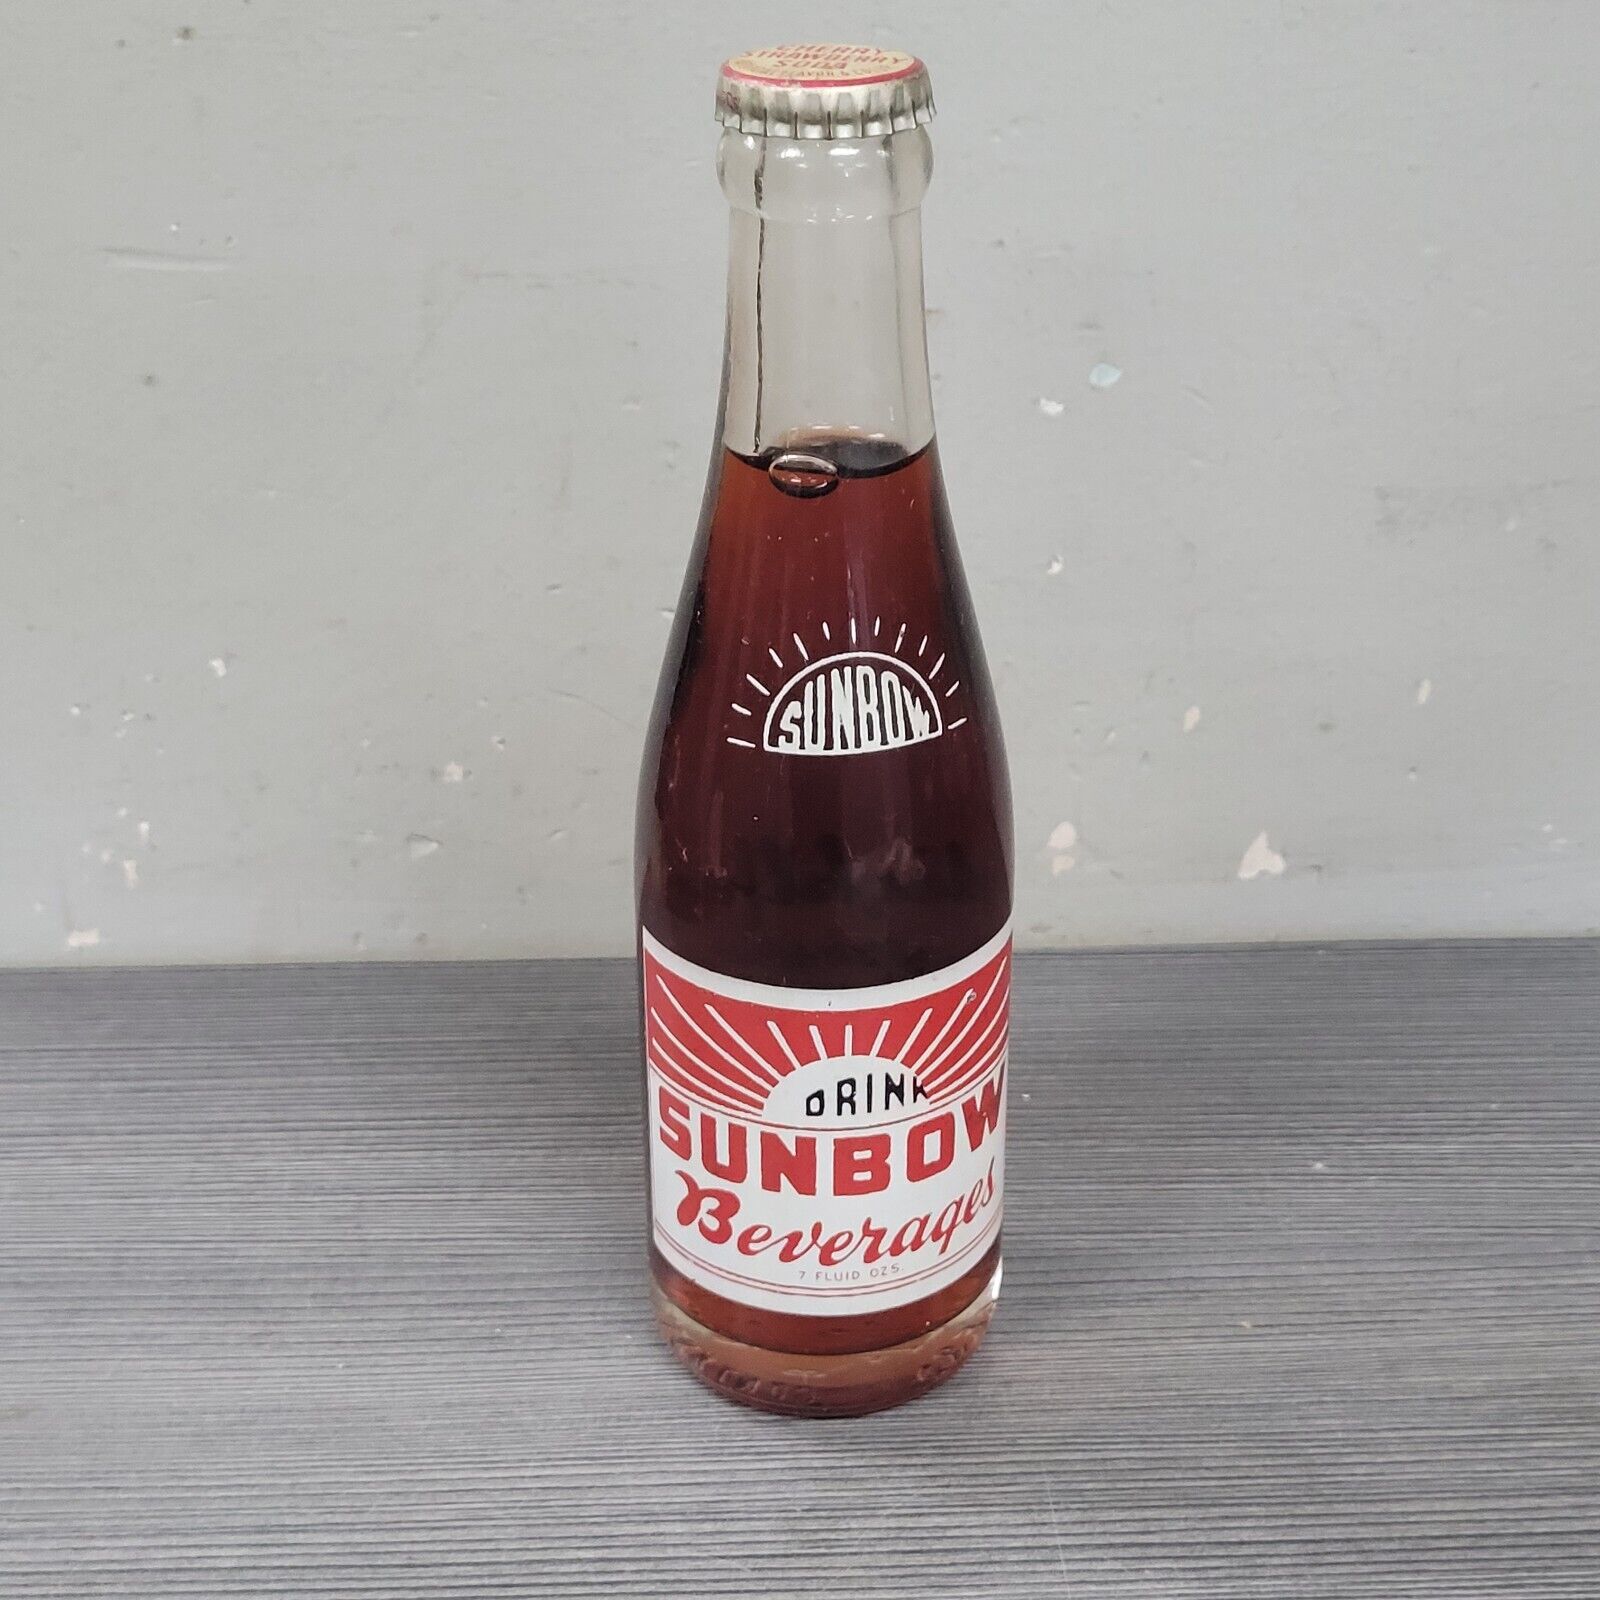 RaRe vintage 1963 Drink Sunbow Full 7 oz cherry strawberry beverage pop sunrise